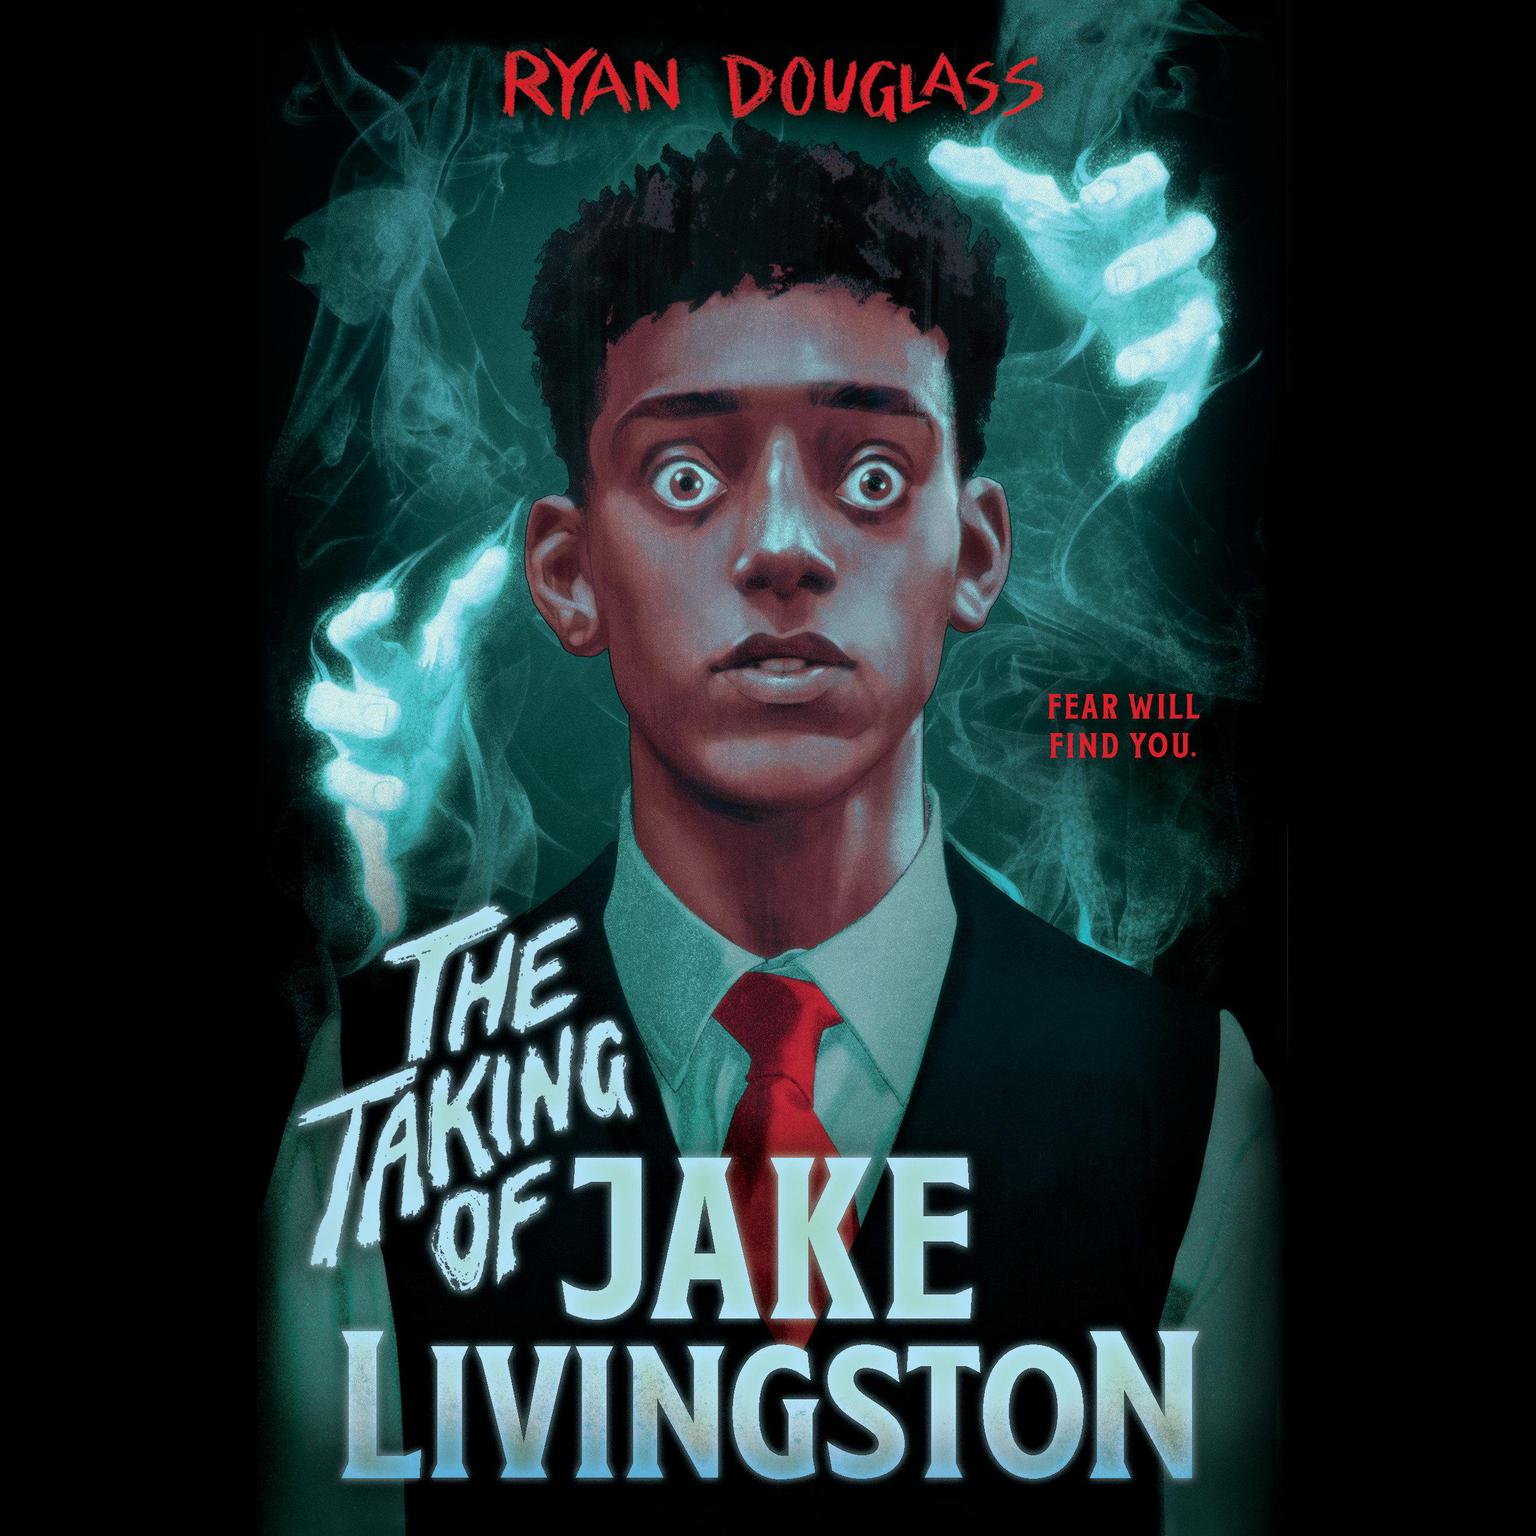 The Taking of Jake Livingston Audiobook, by Ryan Douglass